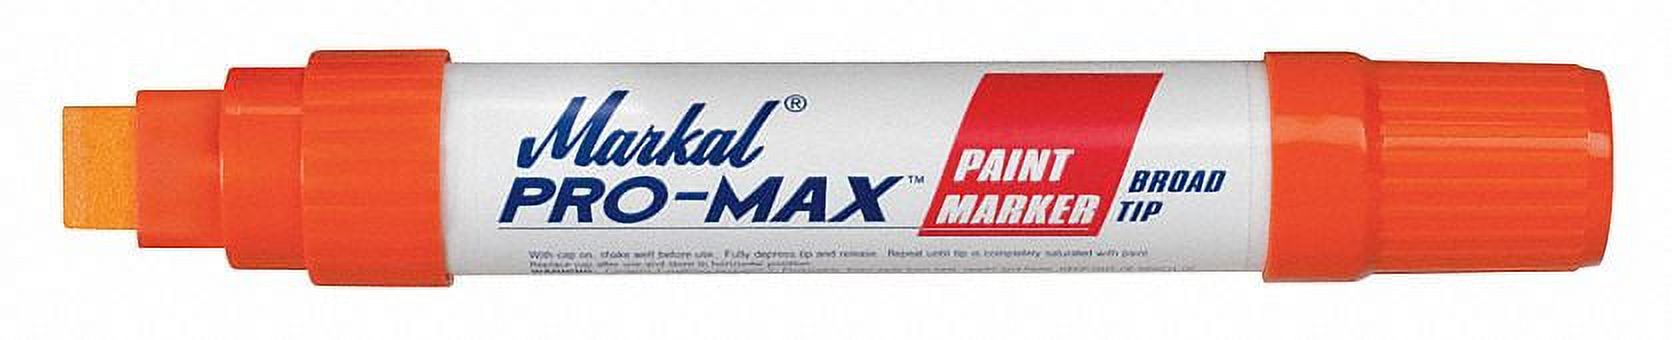 Markal Pro-Max Paint Marker - Orange